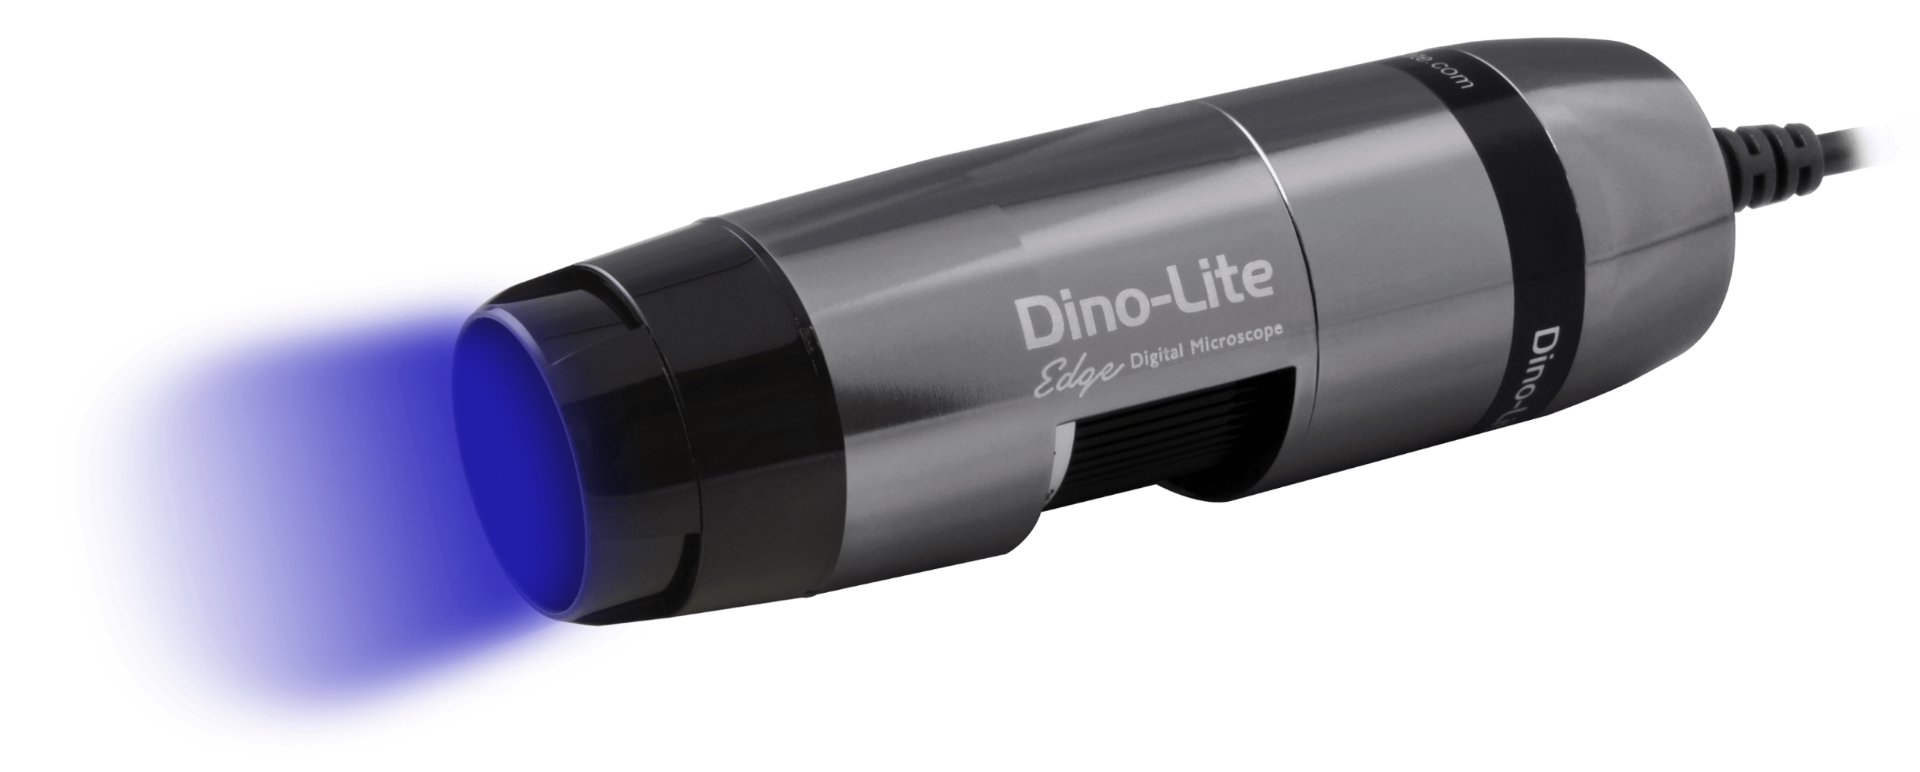 Dino-Lite AM7115MT-FUW Digital Microscope, UV LED 375nm, 20-220x